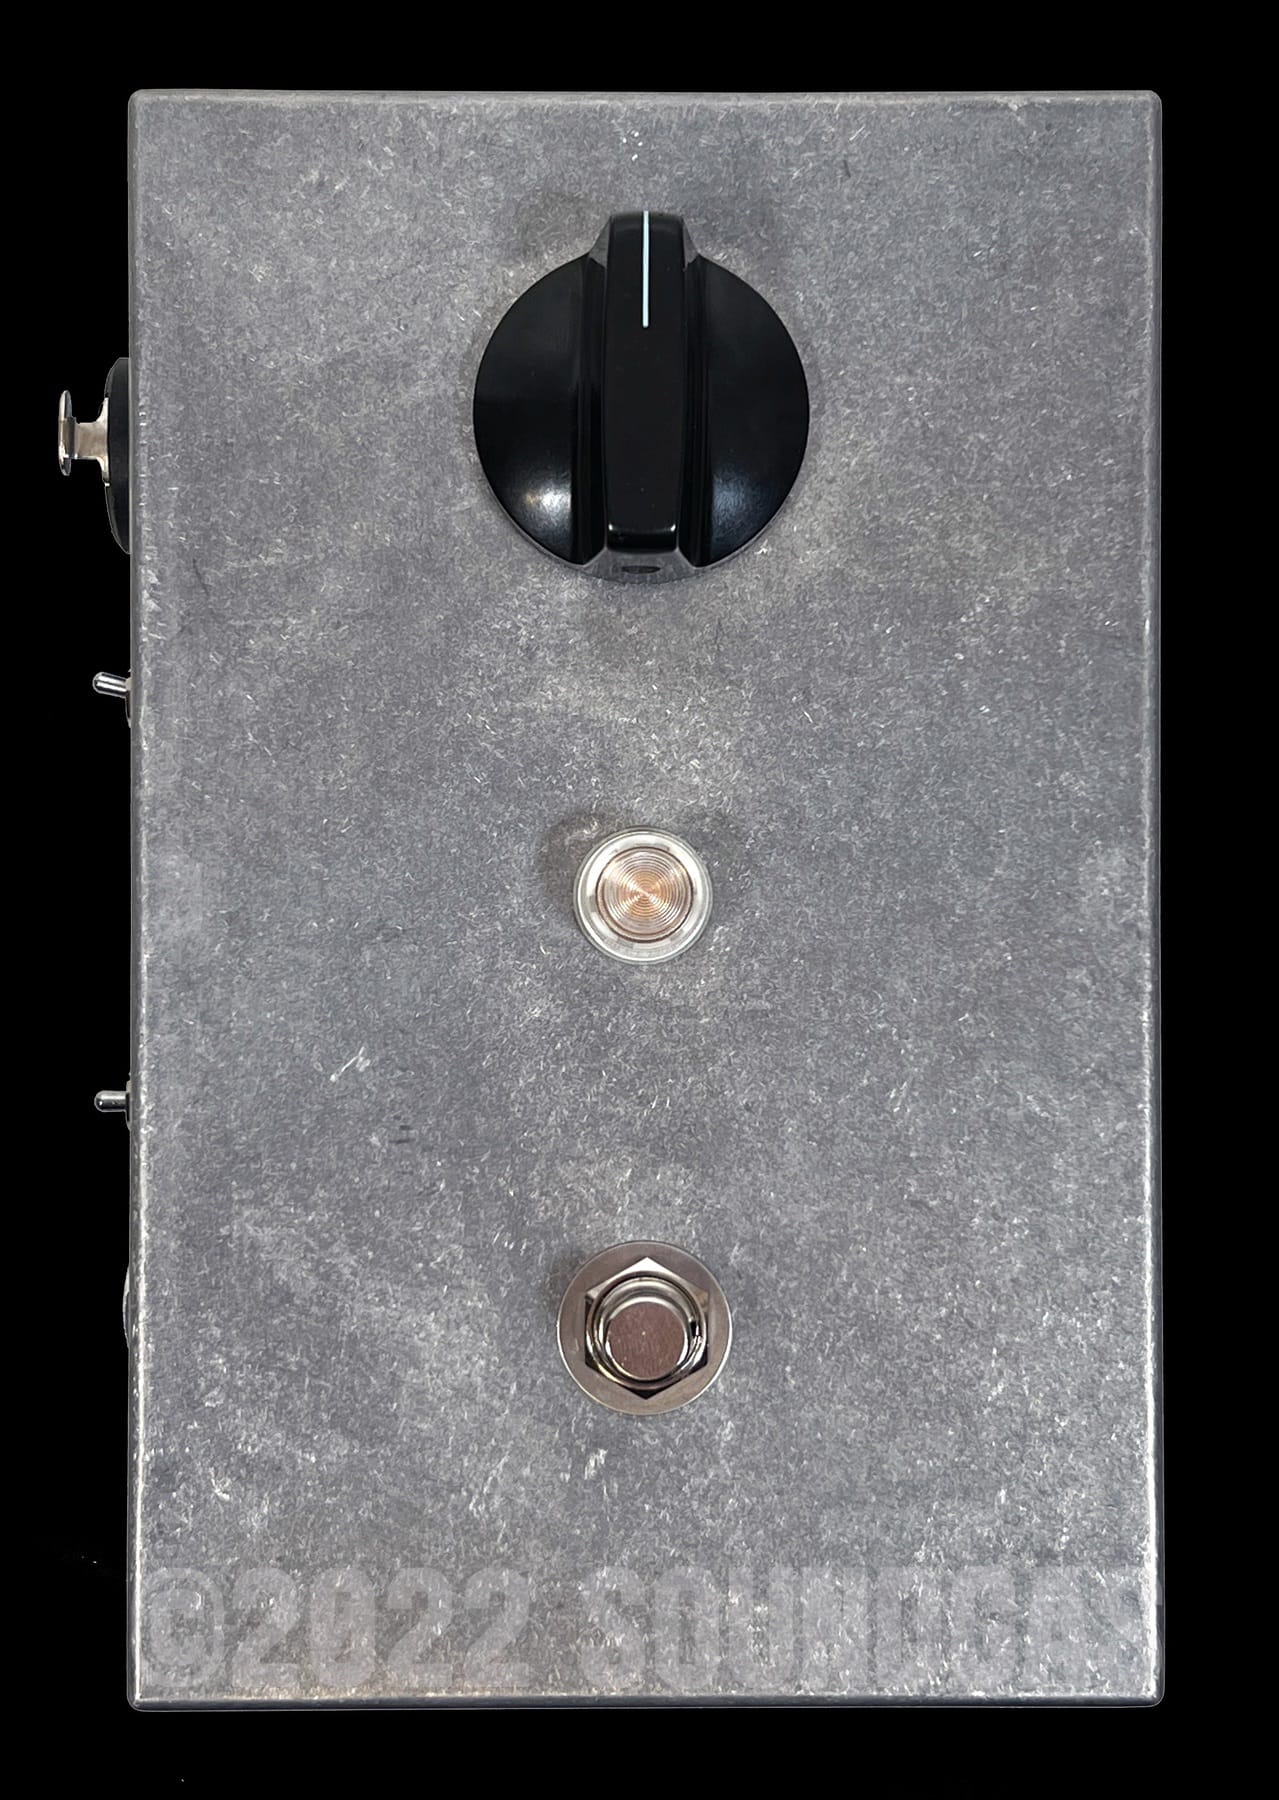 *Soundgas Type 636P - Grampian Guitar Preamp Pedal - Deposit to Reserve